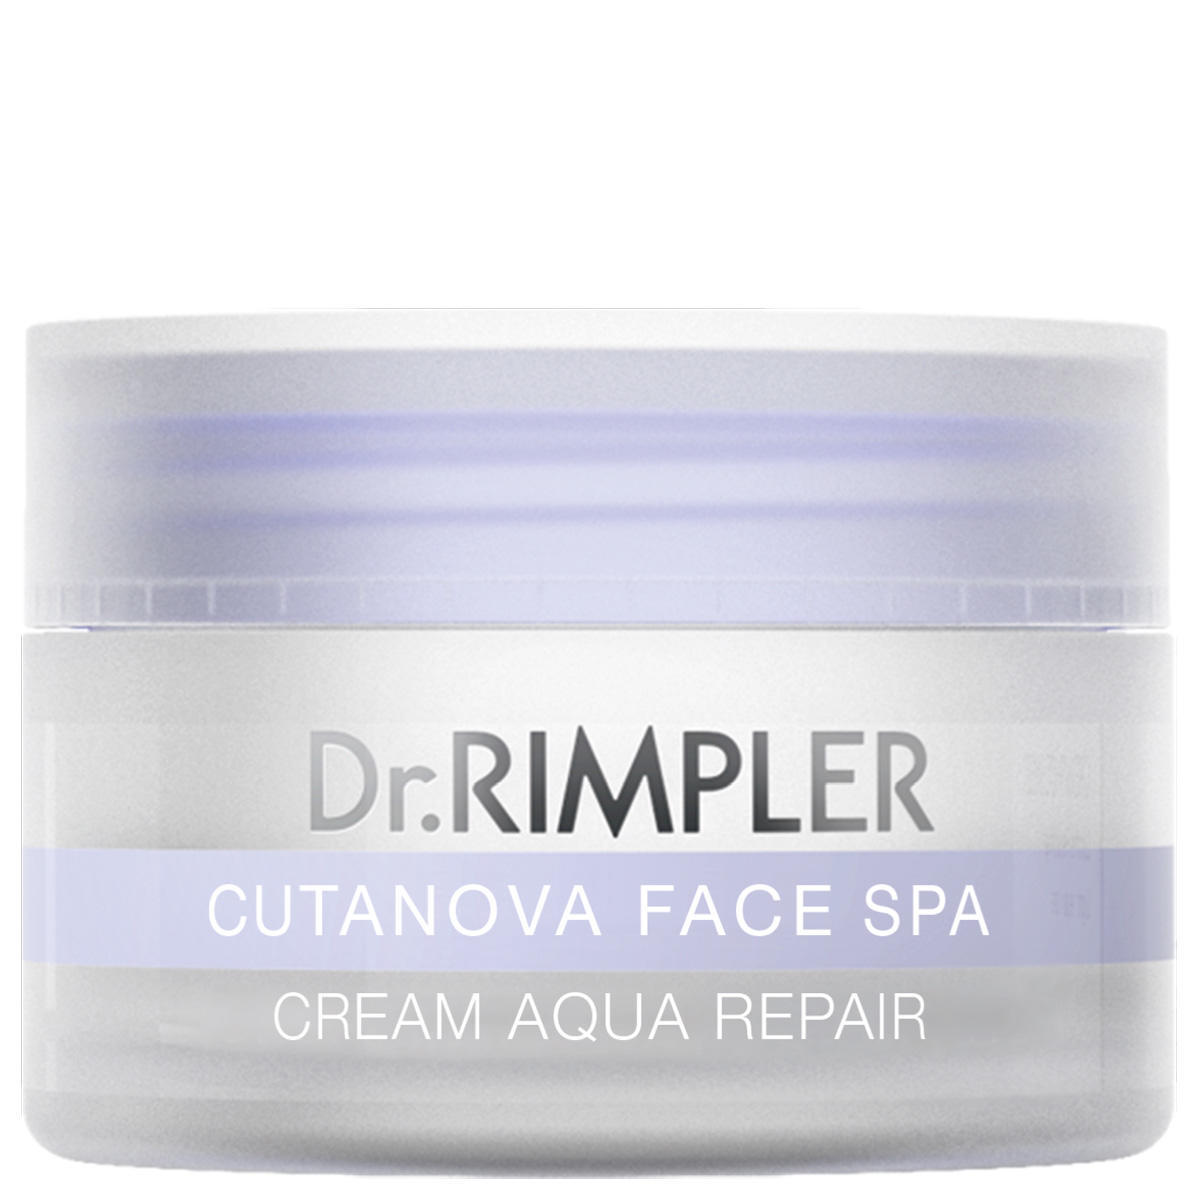 Dr. RIMPLER CUTANOVA FACE SPA Cream Aqua Repair 50 ml - 1